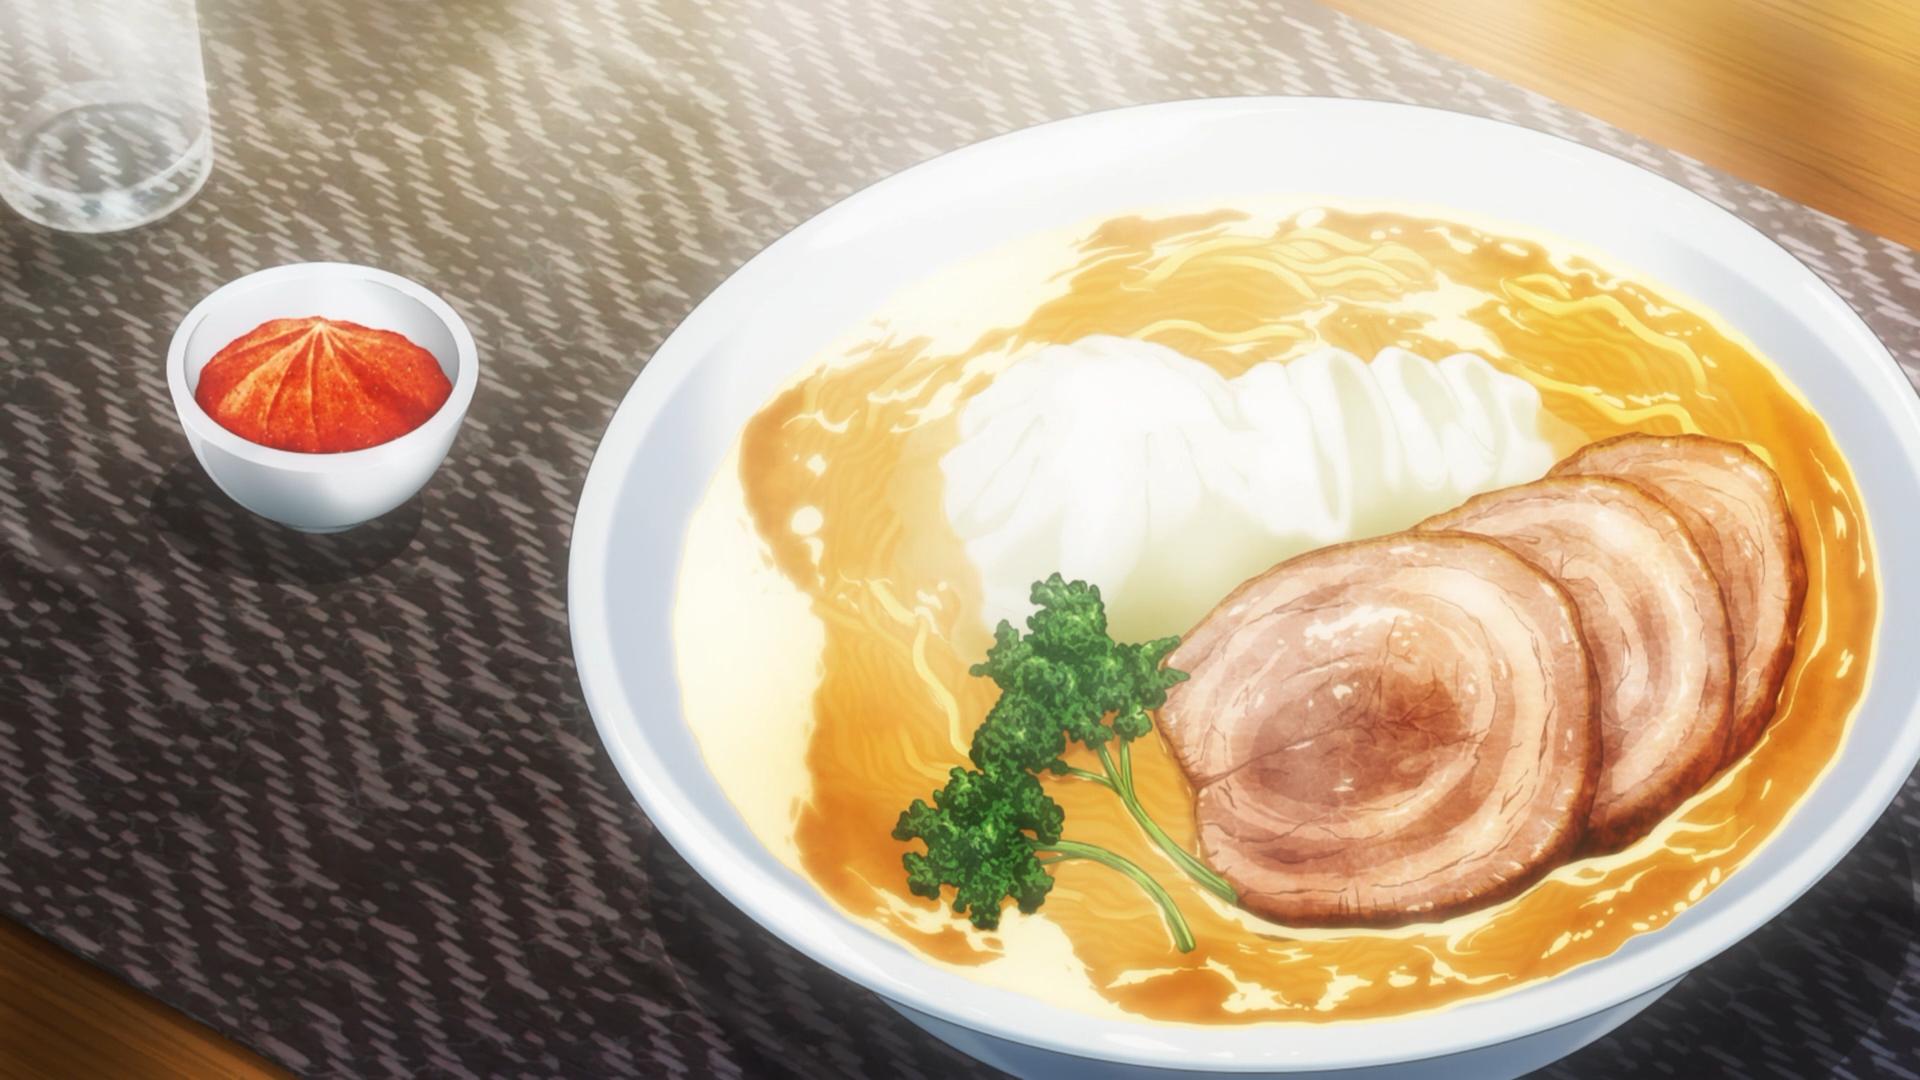 Food Wars! Shokugeki no Soma (season 3) - Wikipedia